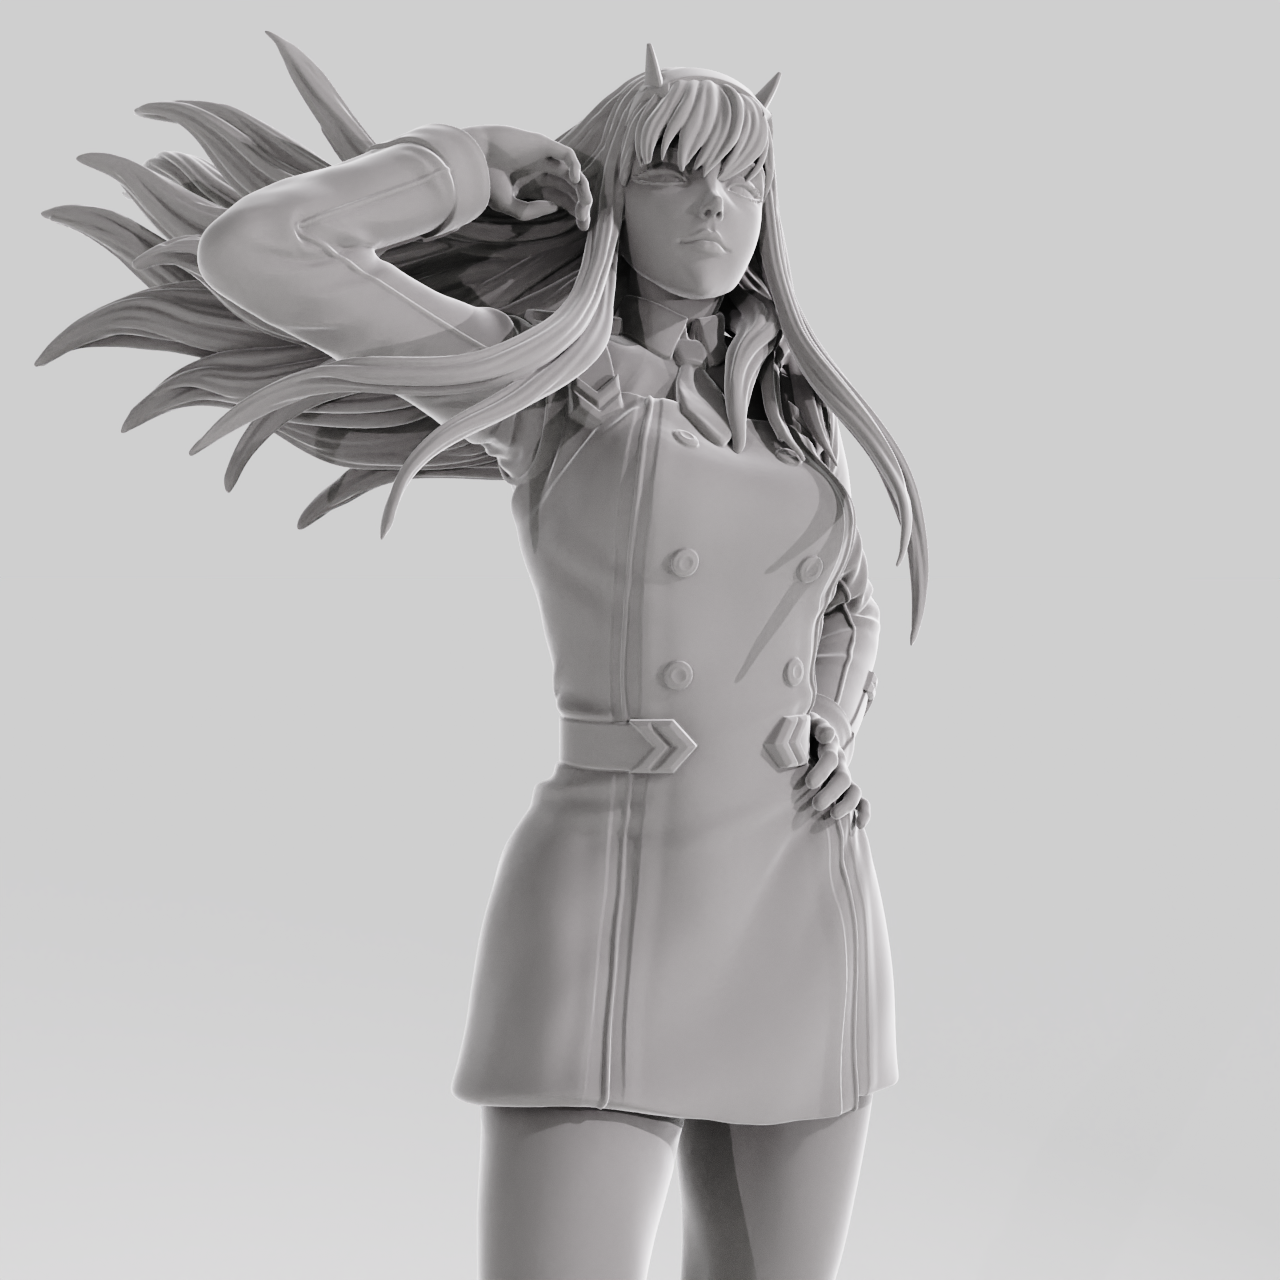 3D file Roxy Migurdia - Mushoku Tensei Anime Figurine STL for 3D